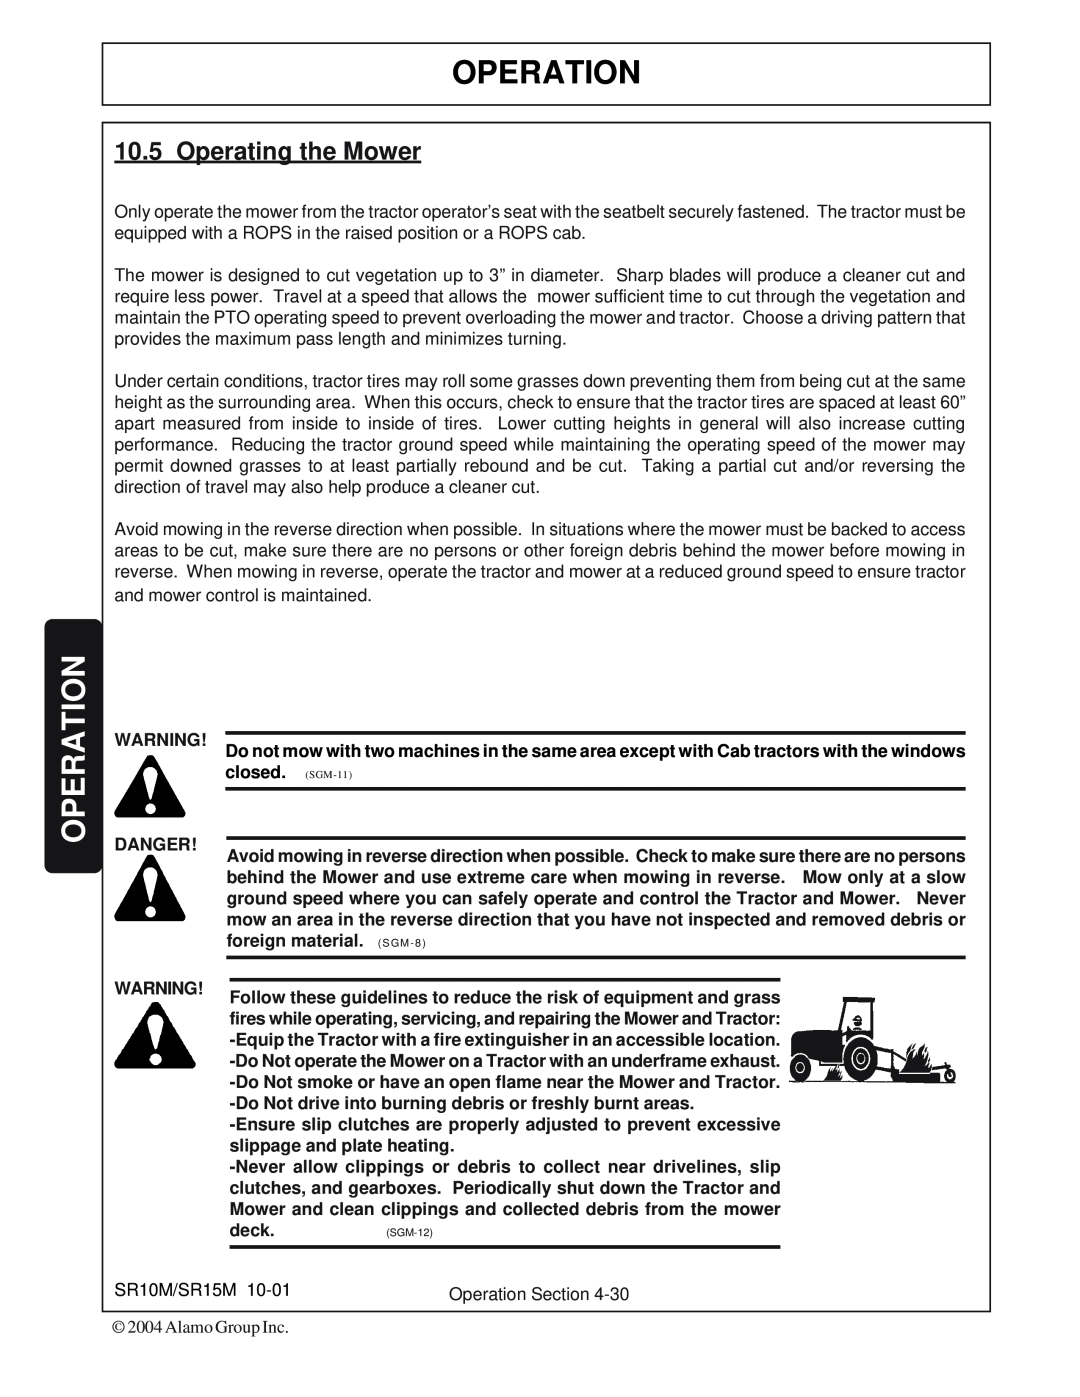 Servis-Rhino SR10M, SR15M manual Operation, Operating the Mower, Danger 